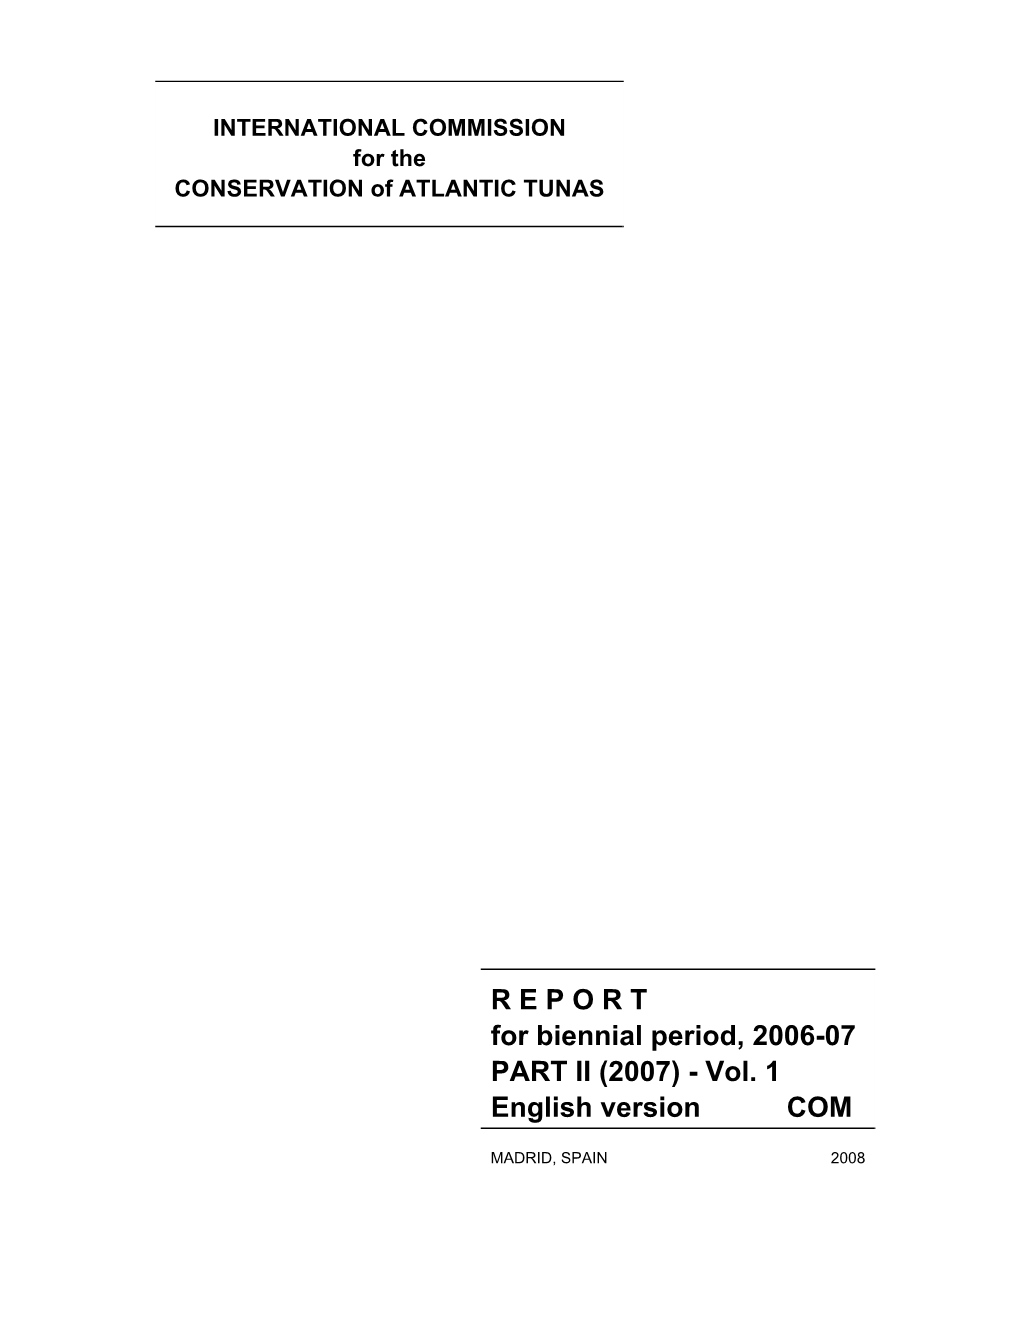 REPORT for Biennial Period, 2006-07 PART II (2007)